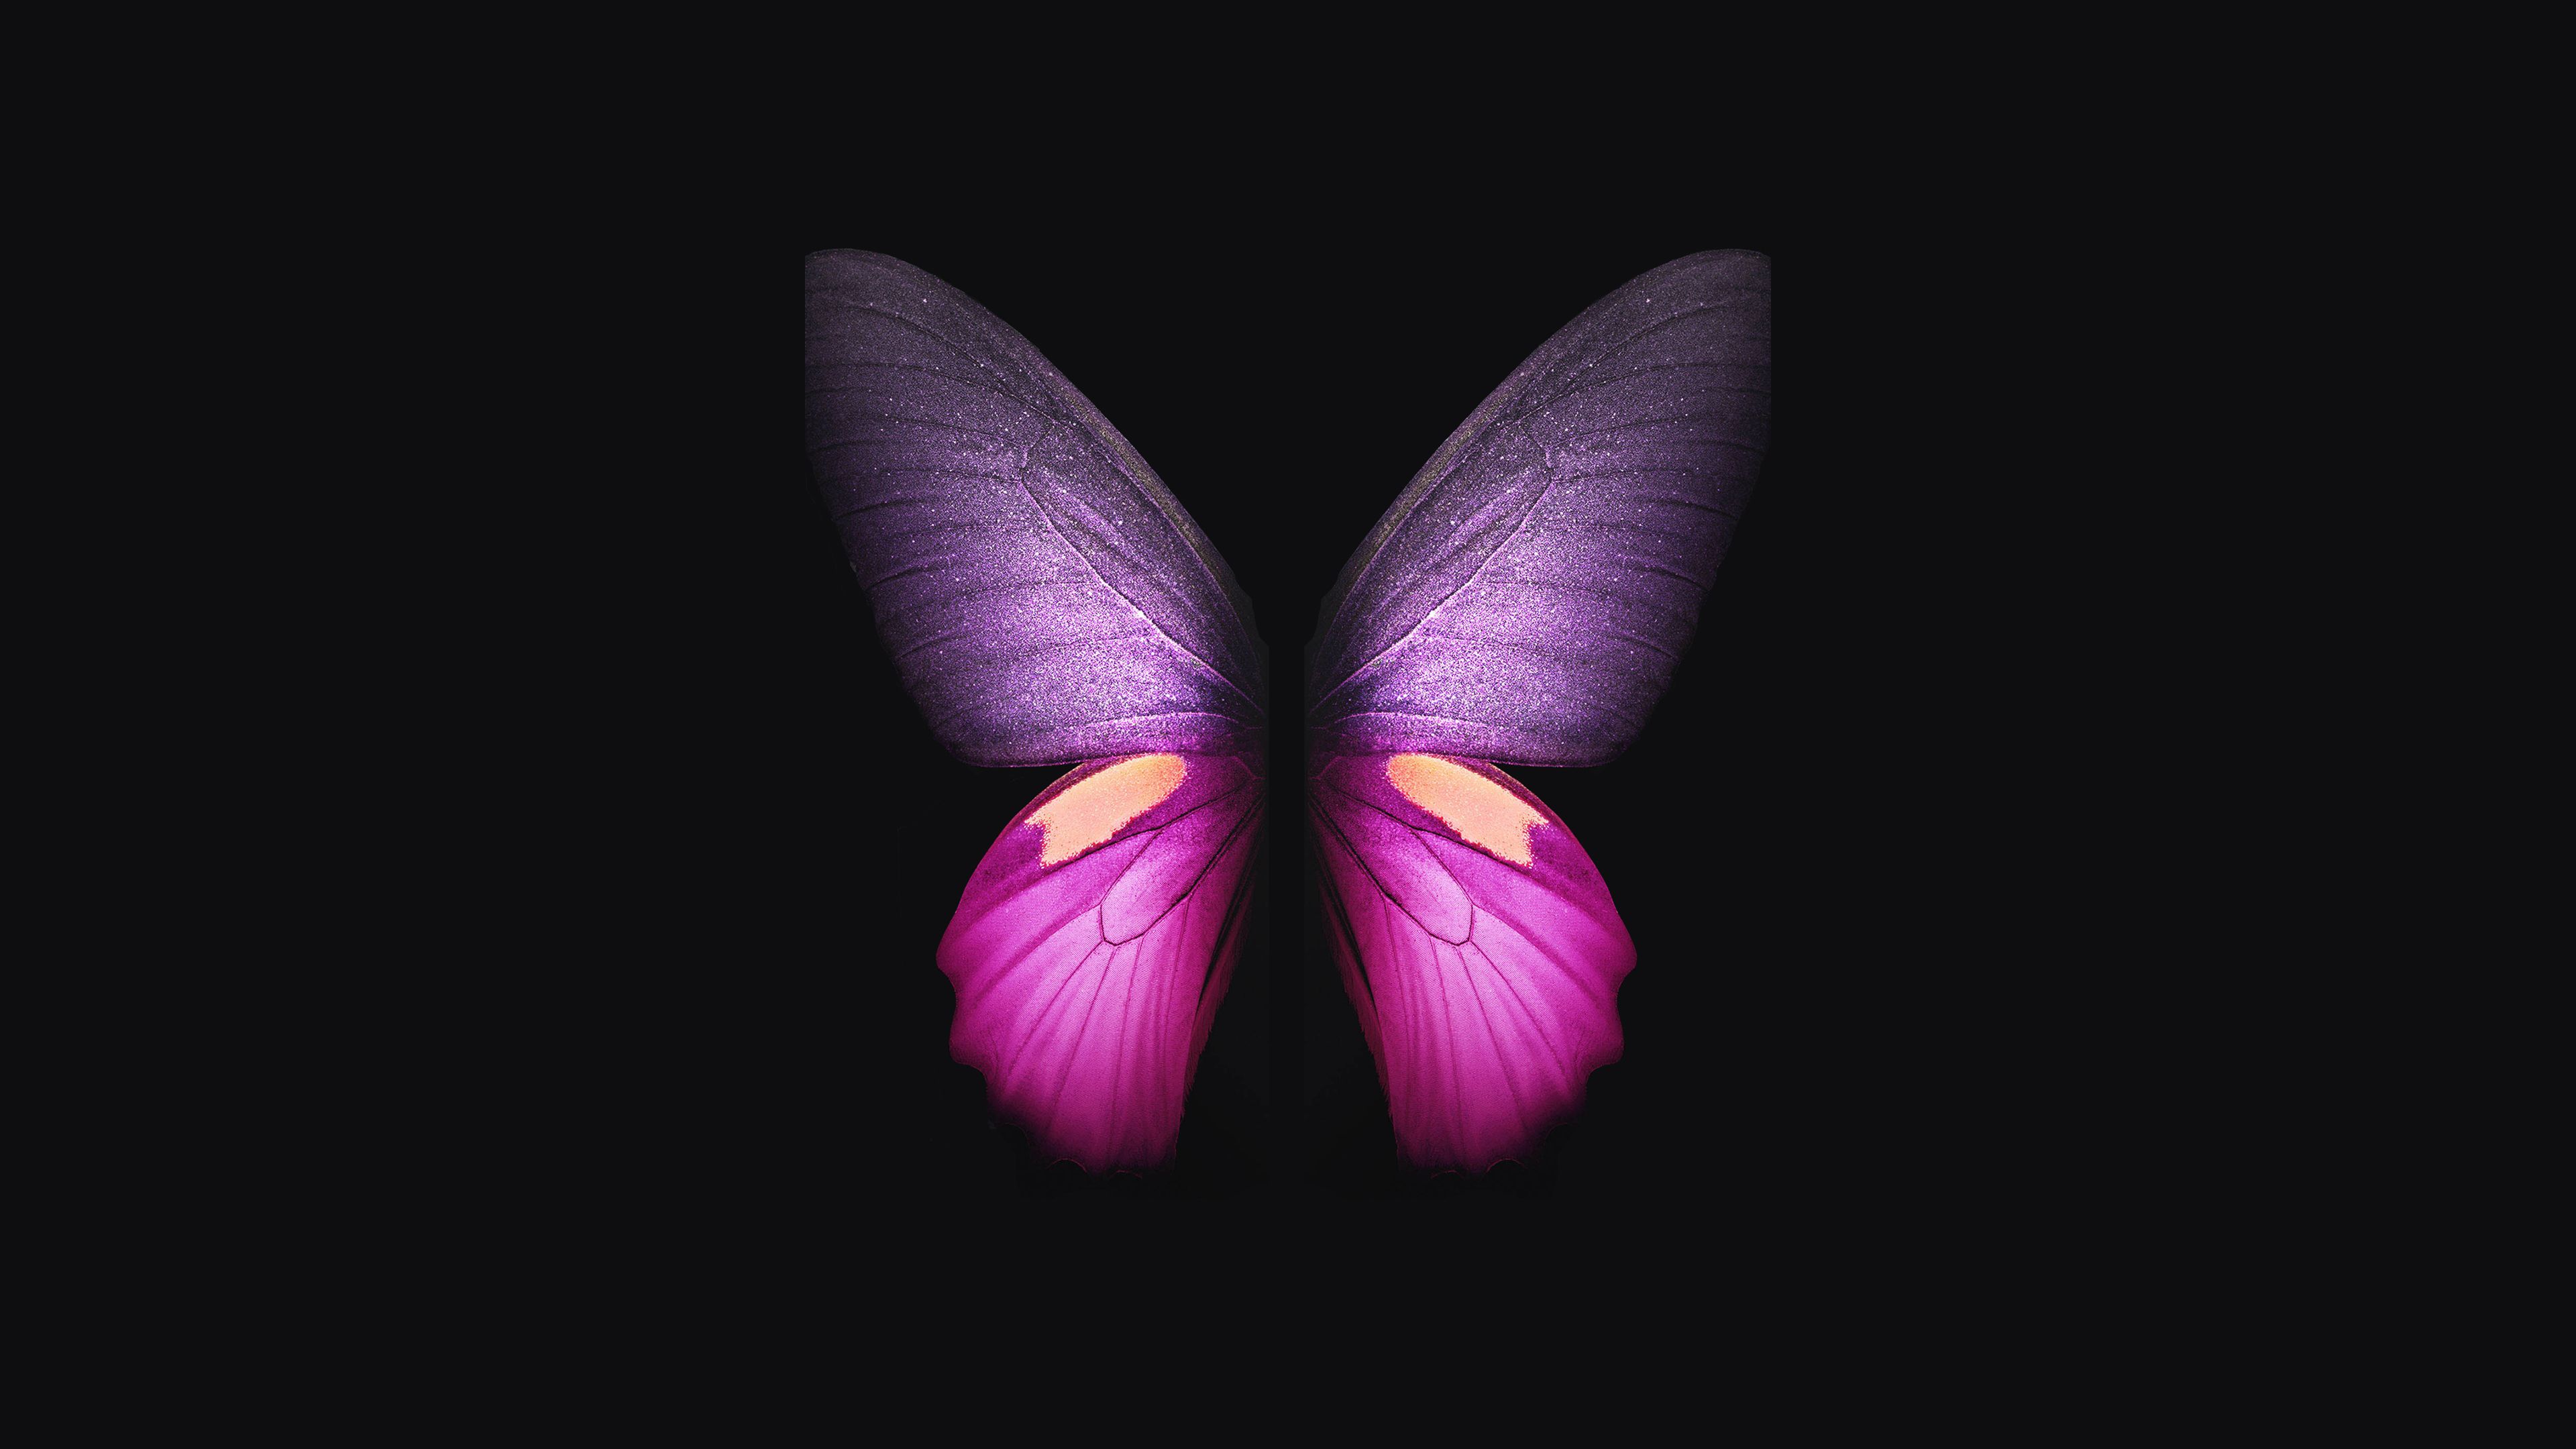 Butterfly iPhone Wallpaper HD